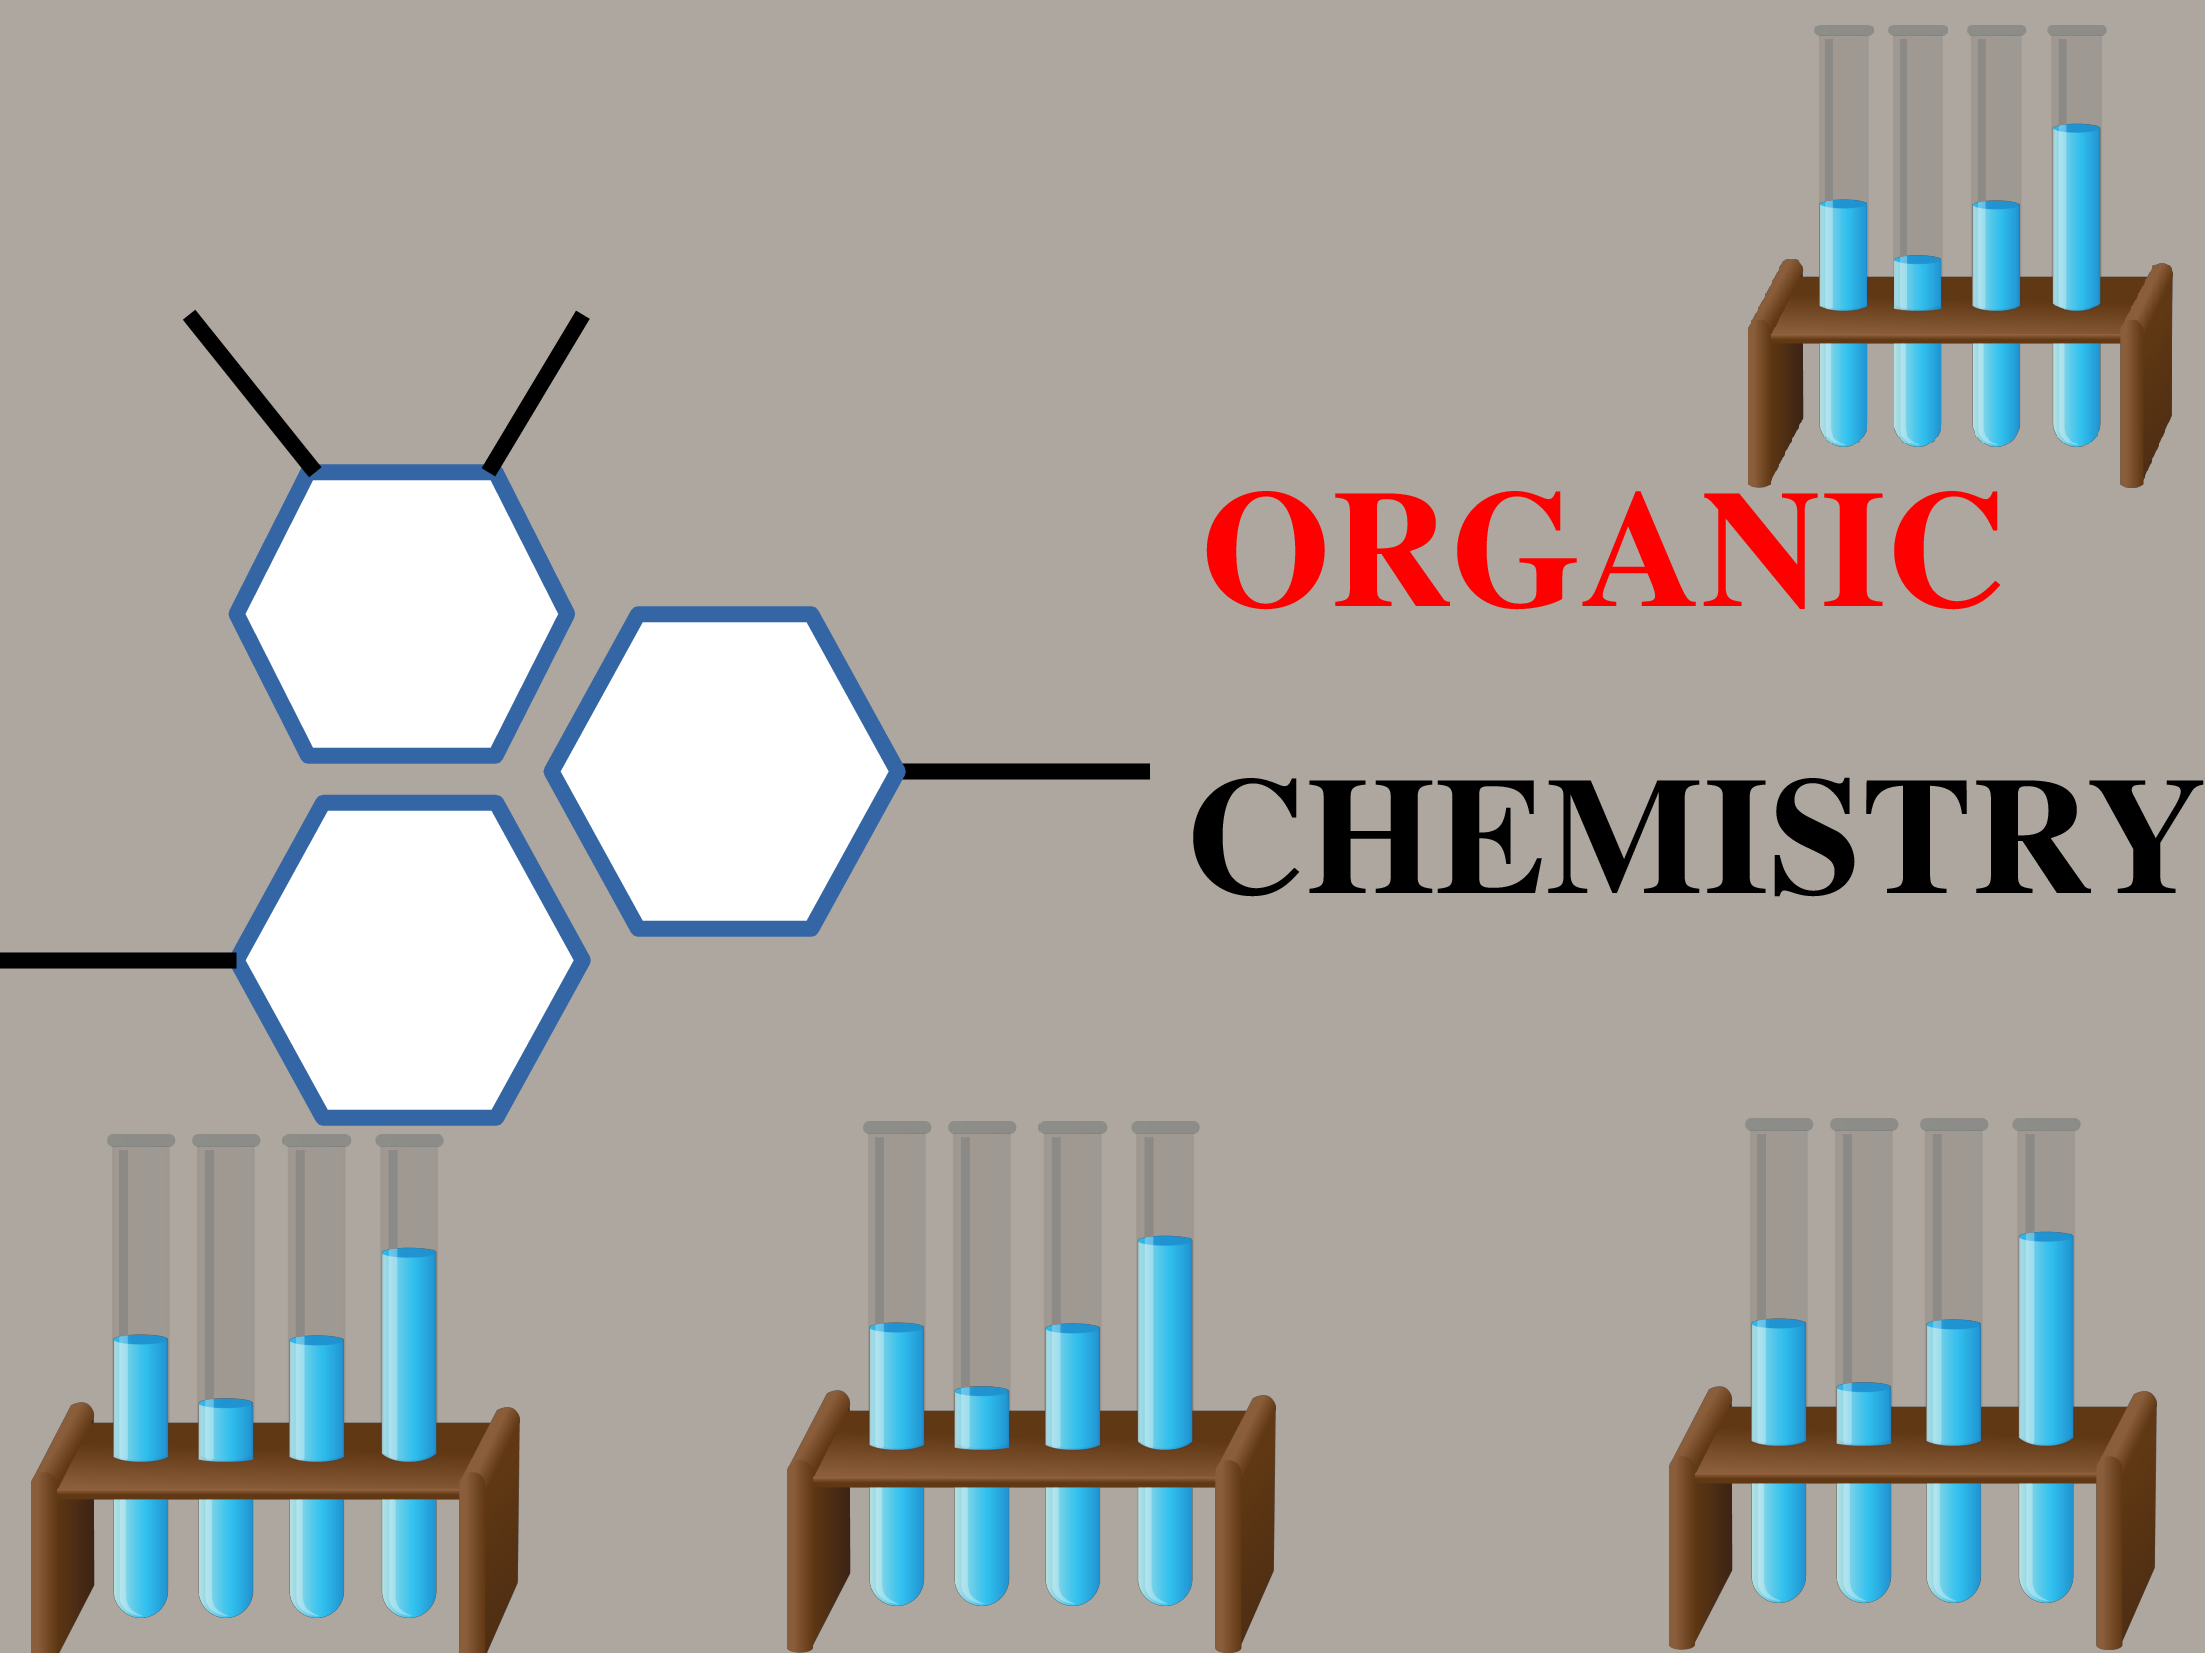 Basic Organic Chemistry (Semester 2)